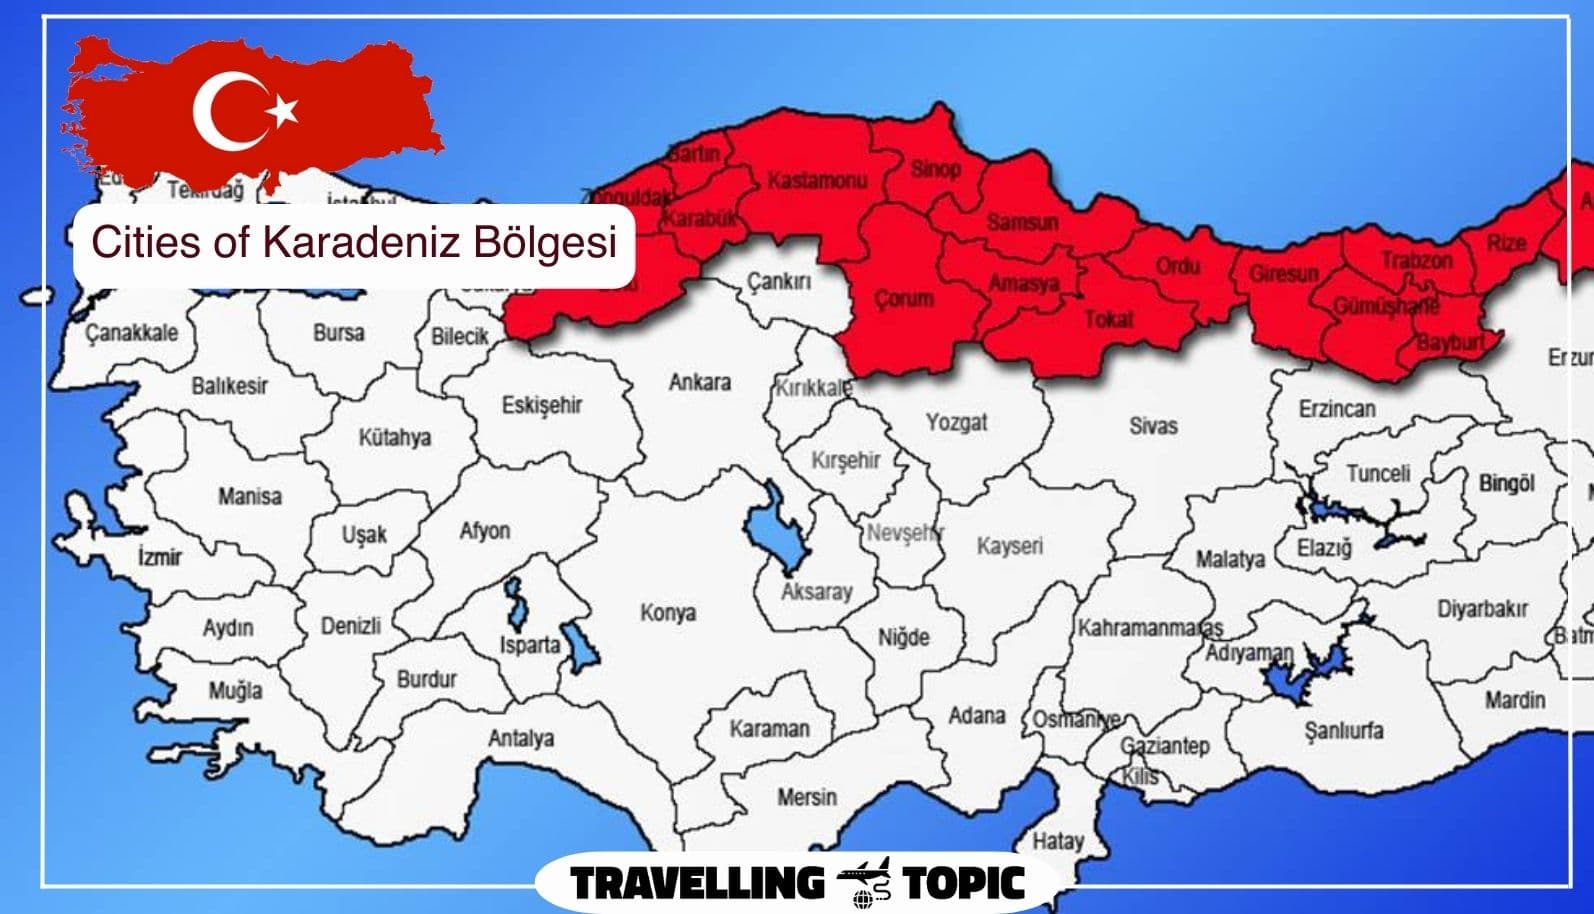 Cities of Karadeniz Bölgesi